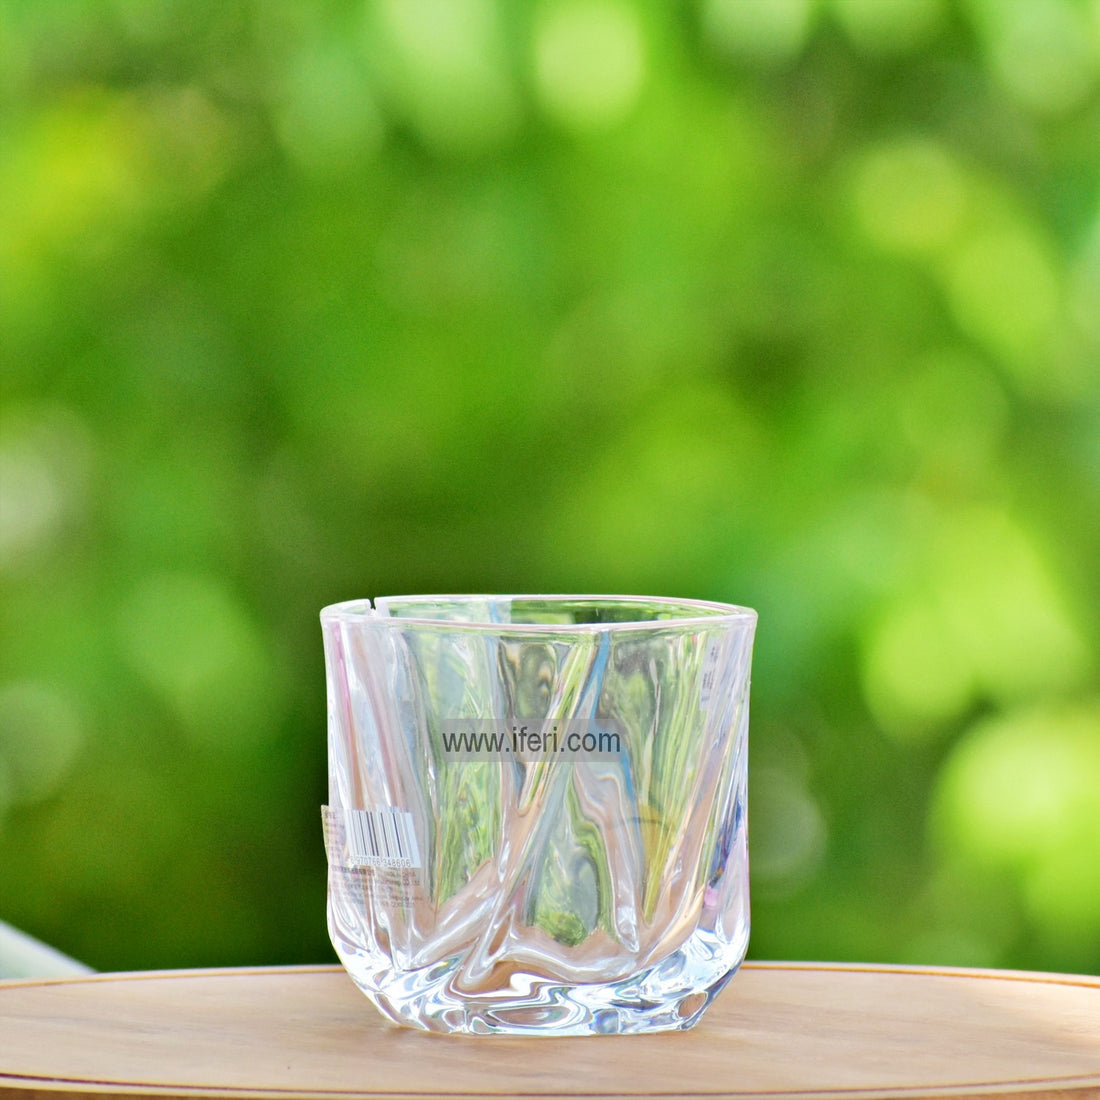 Buy Water Juice Glass Set Online from iferi.com in Bangladesh